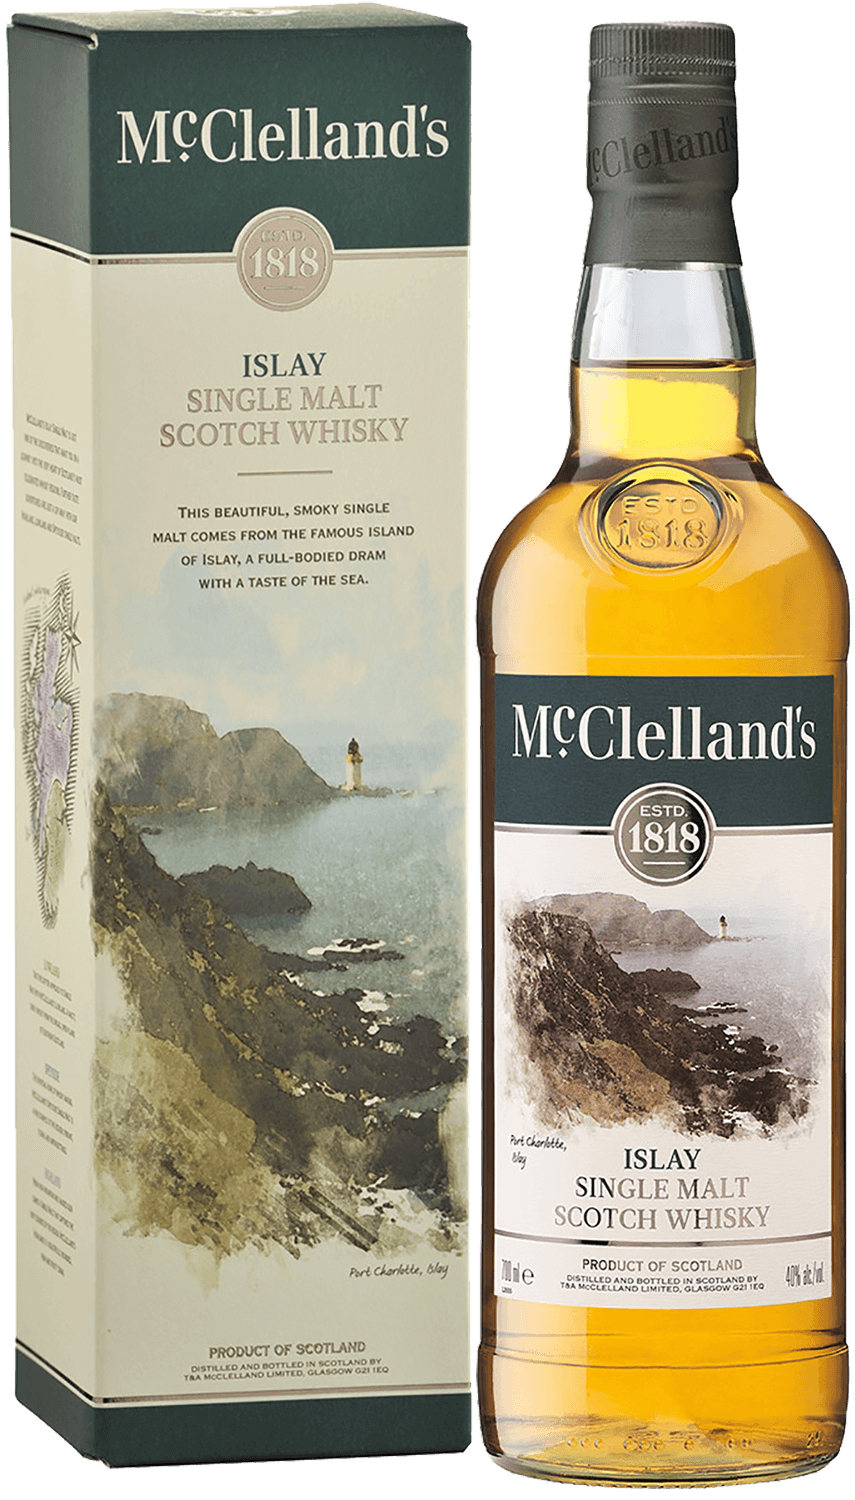 McClelland's Islay single malt scotch whisky (gift box) inchmoan 12 y o single malt scotch whisky gift box